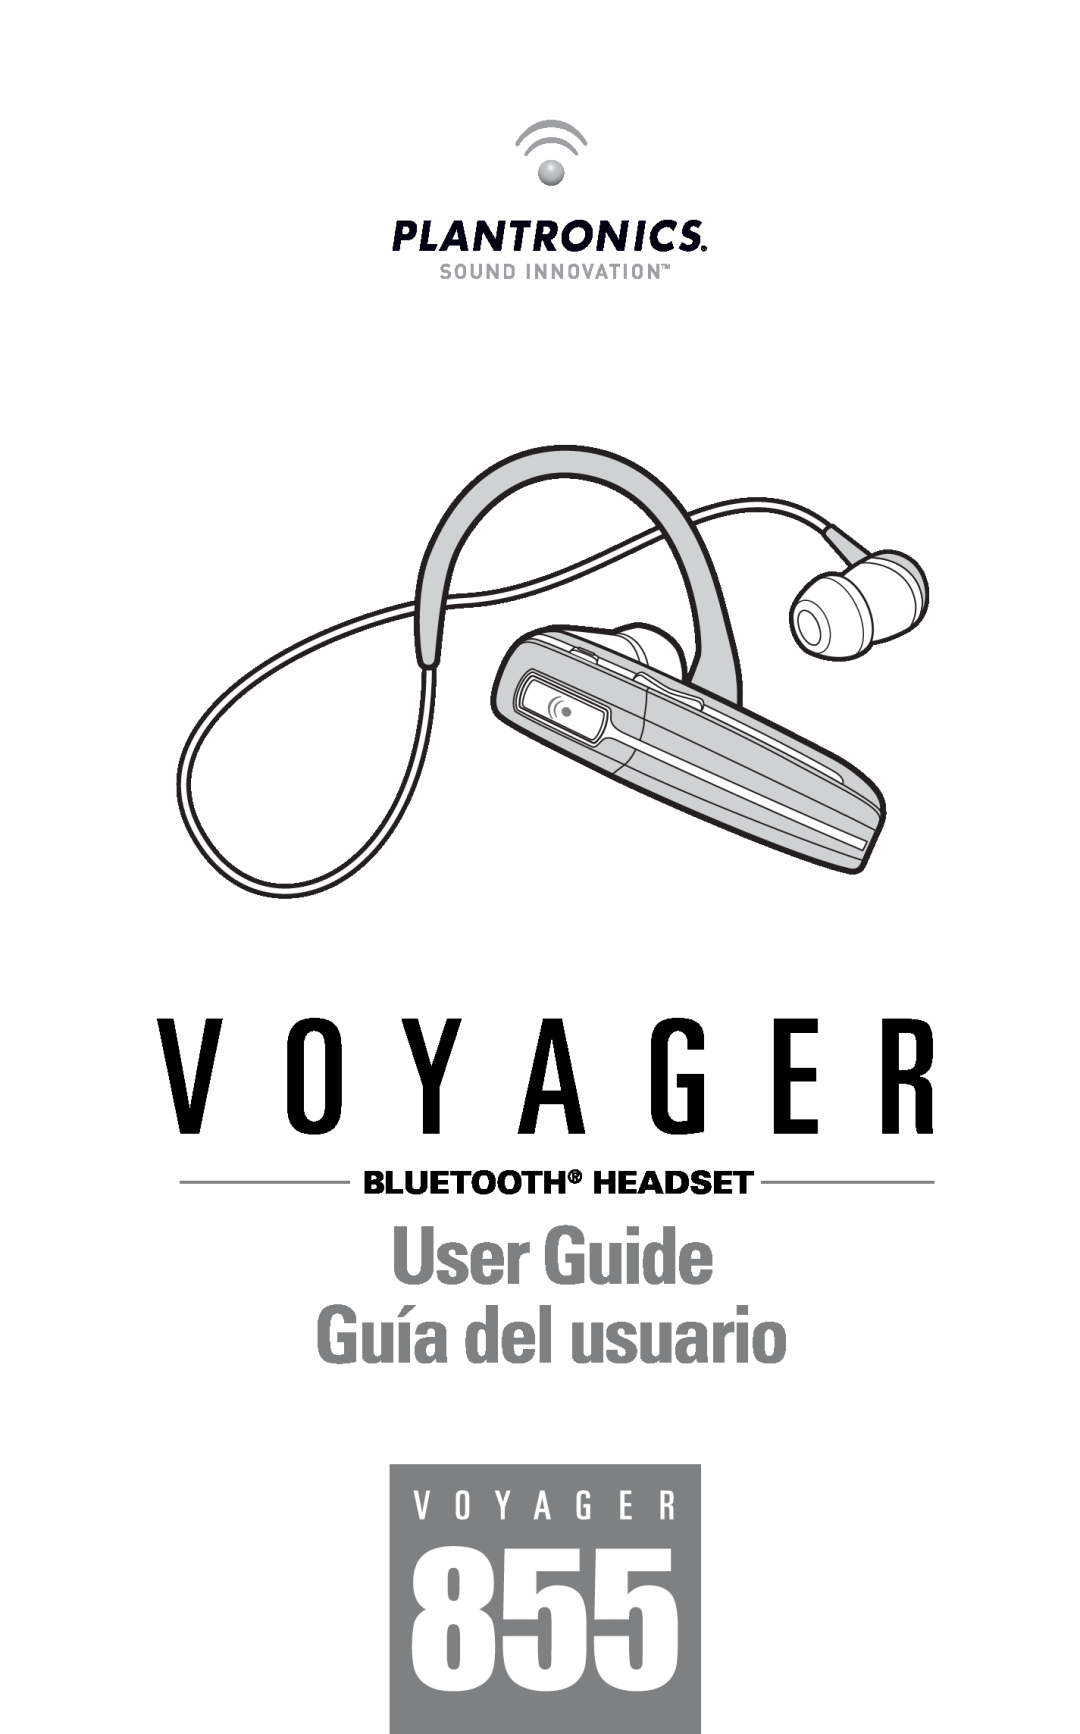 Plantronics VOYAGER855 manual Bluetooth Headset, Guía del usuario 